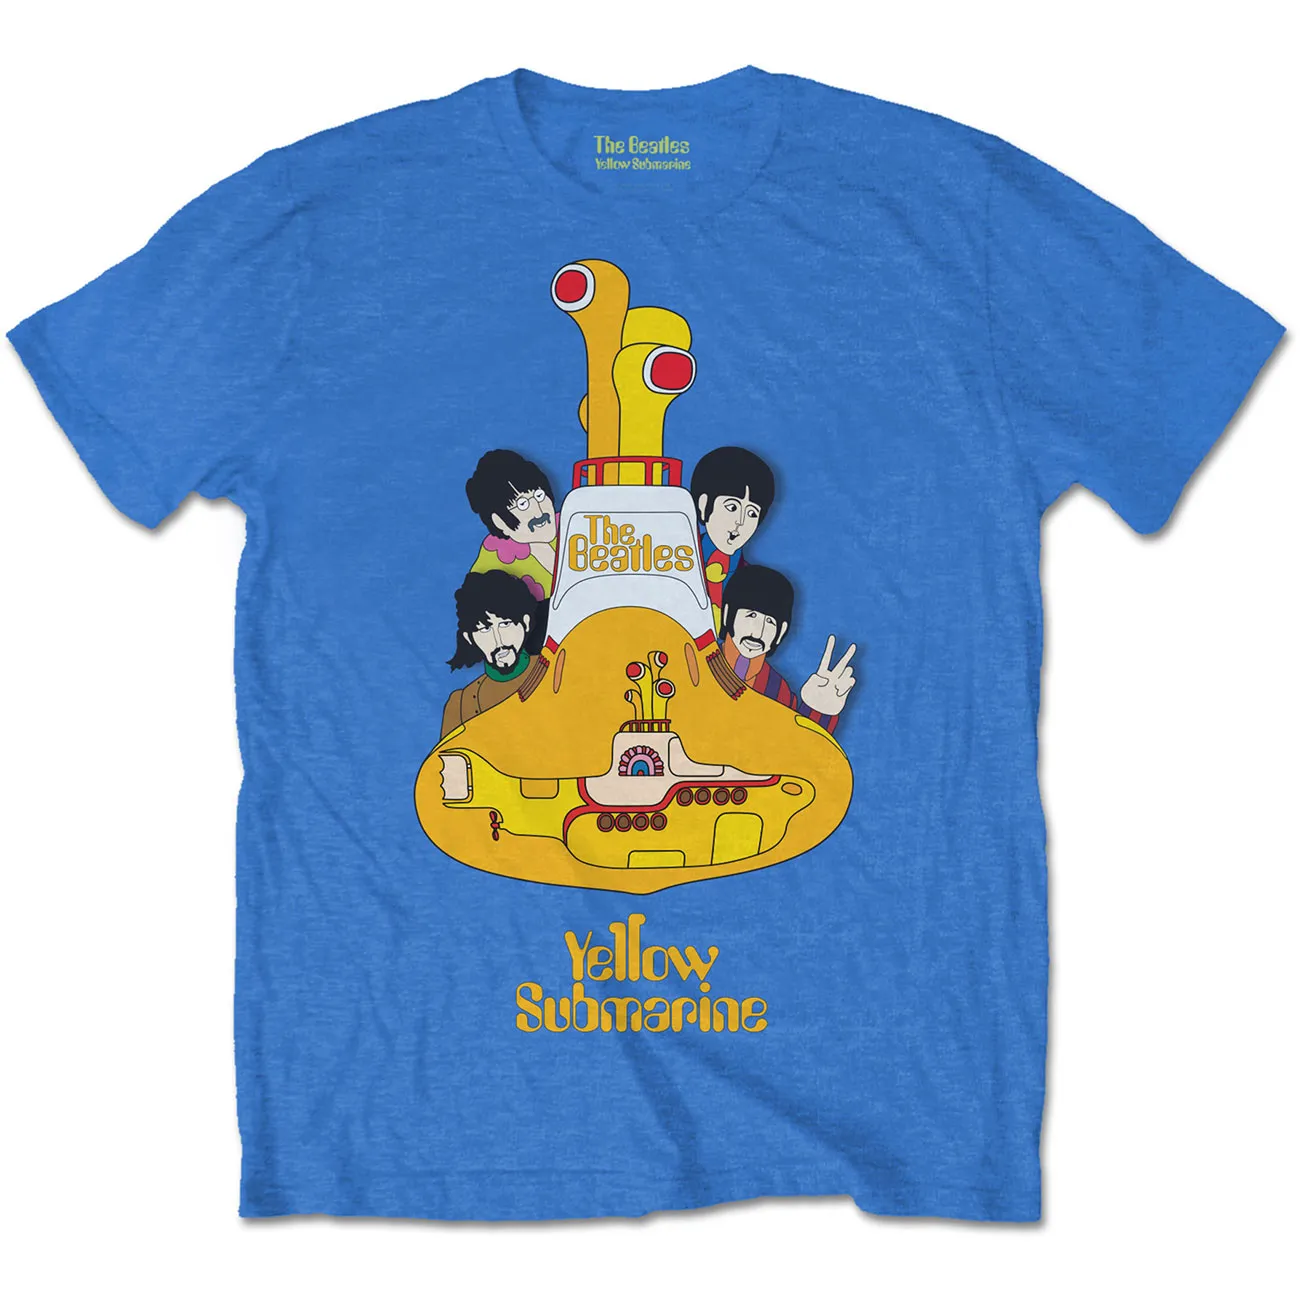 The Beatles - Unisex T-Shirt Yellow Submarine Sub Sub artwork